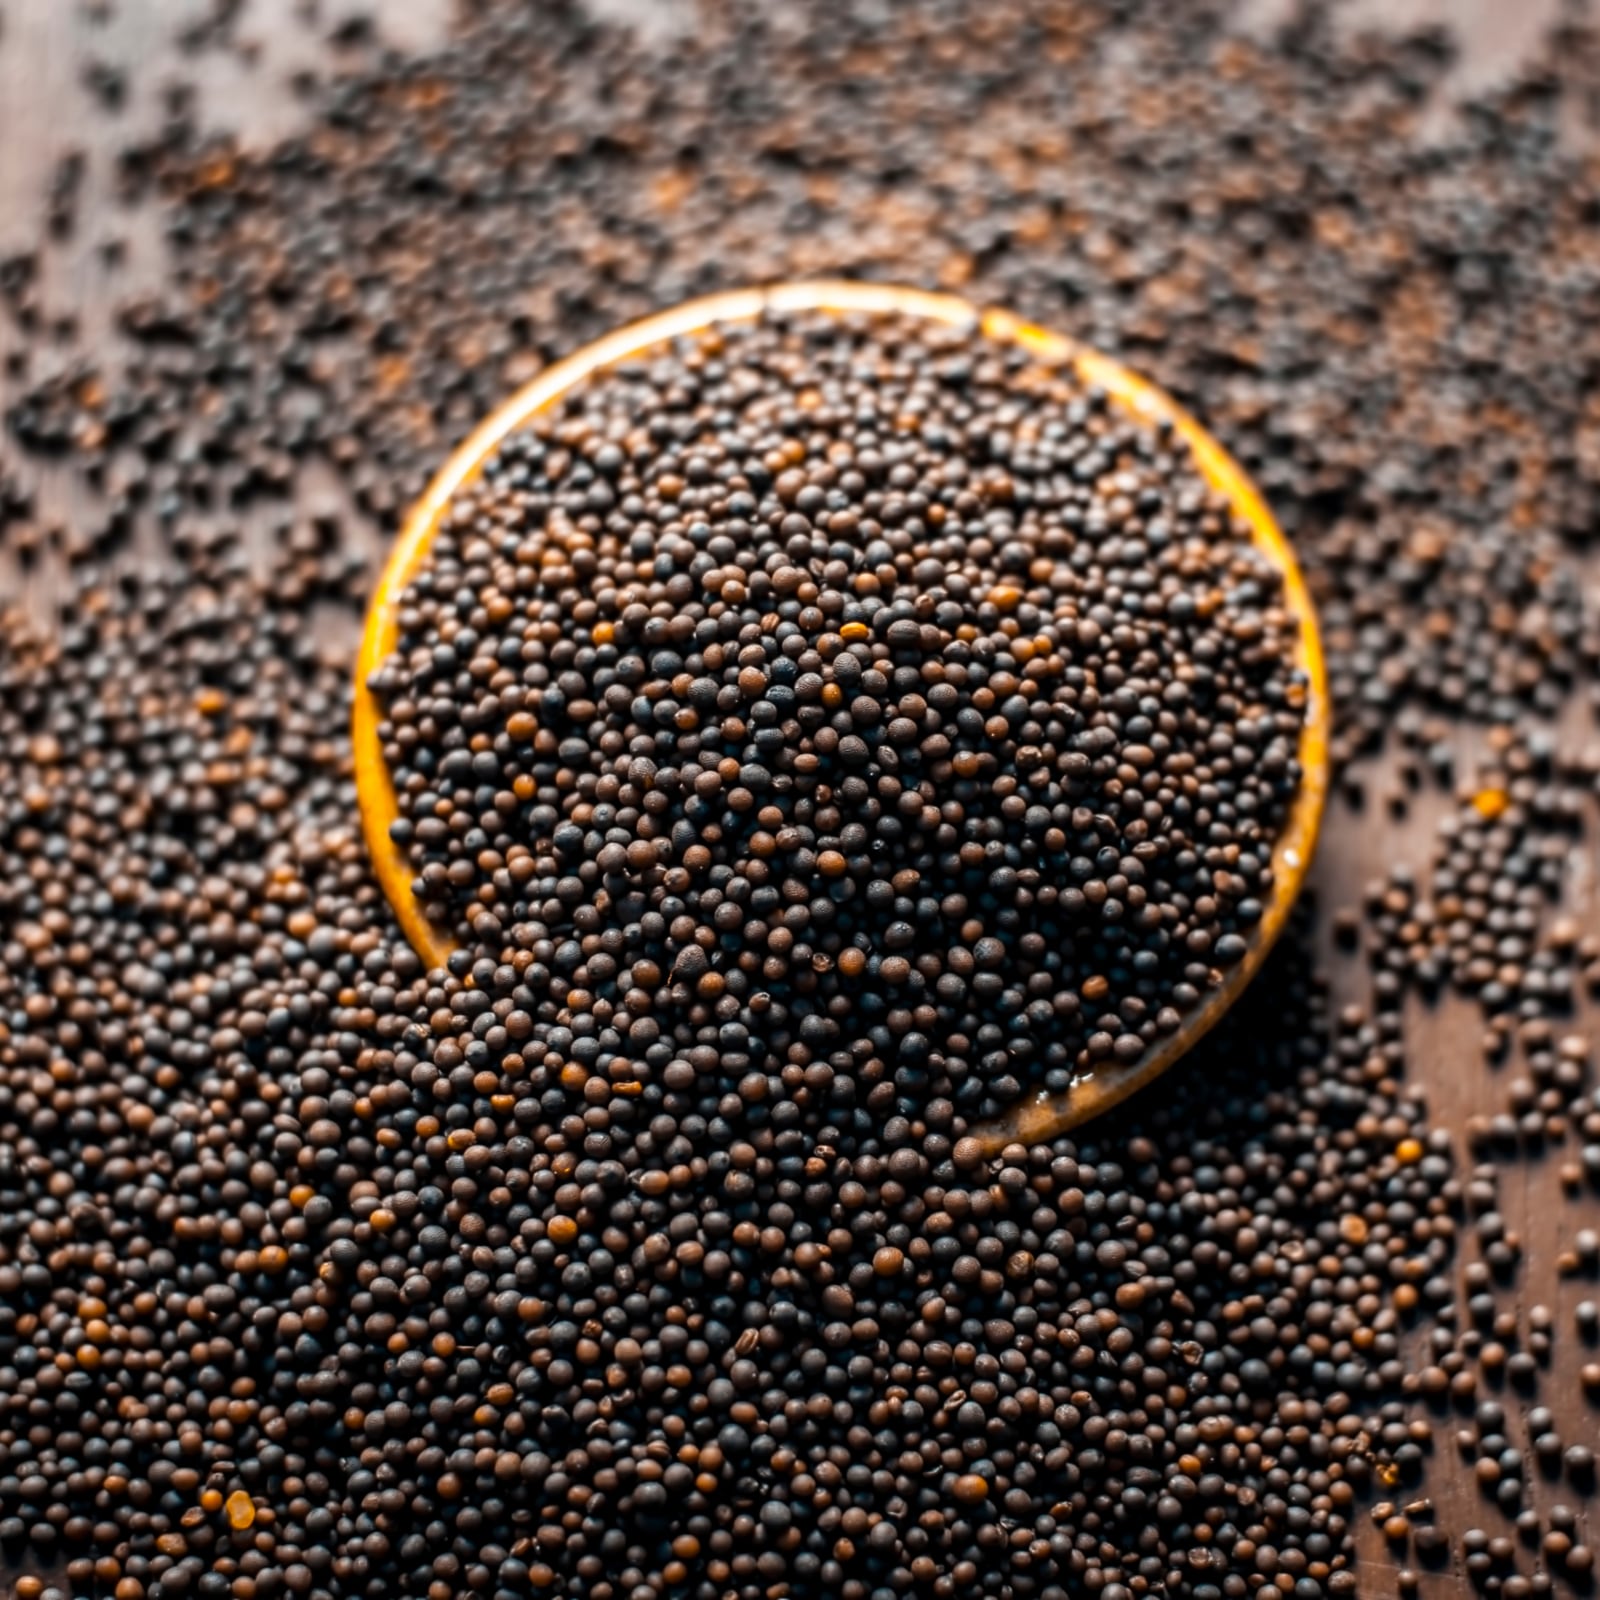 Mustard Seeds Suppliers in Ahmedabad, Gujarat, India